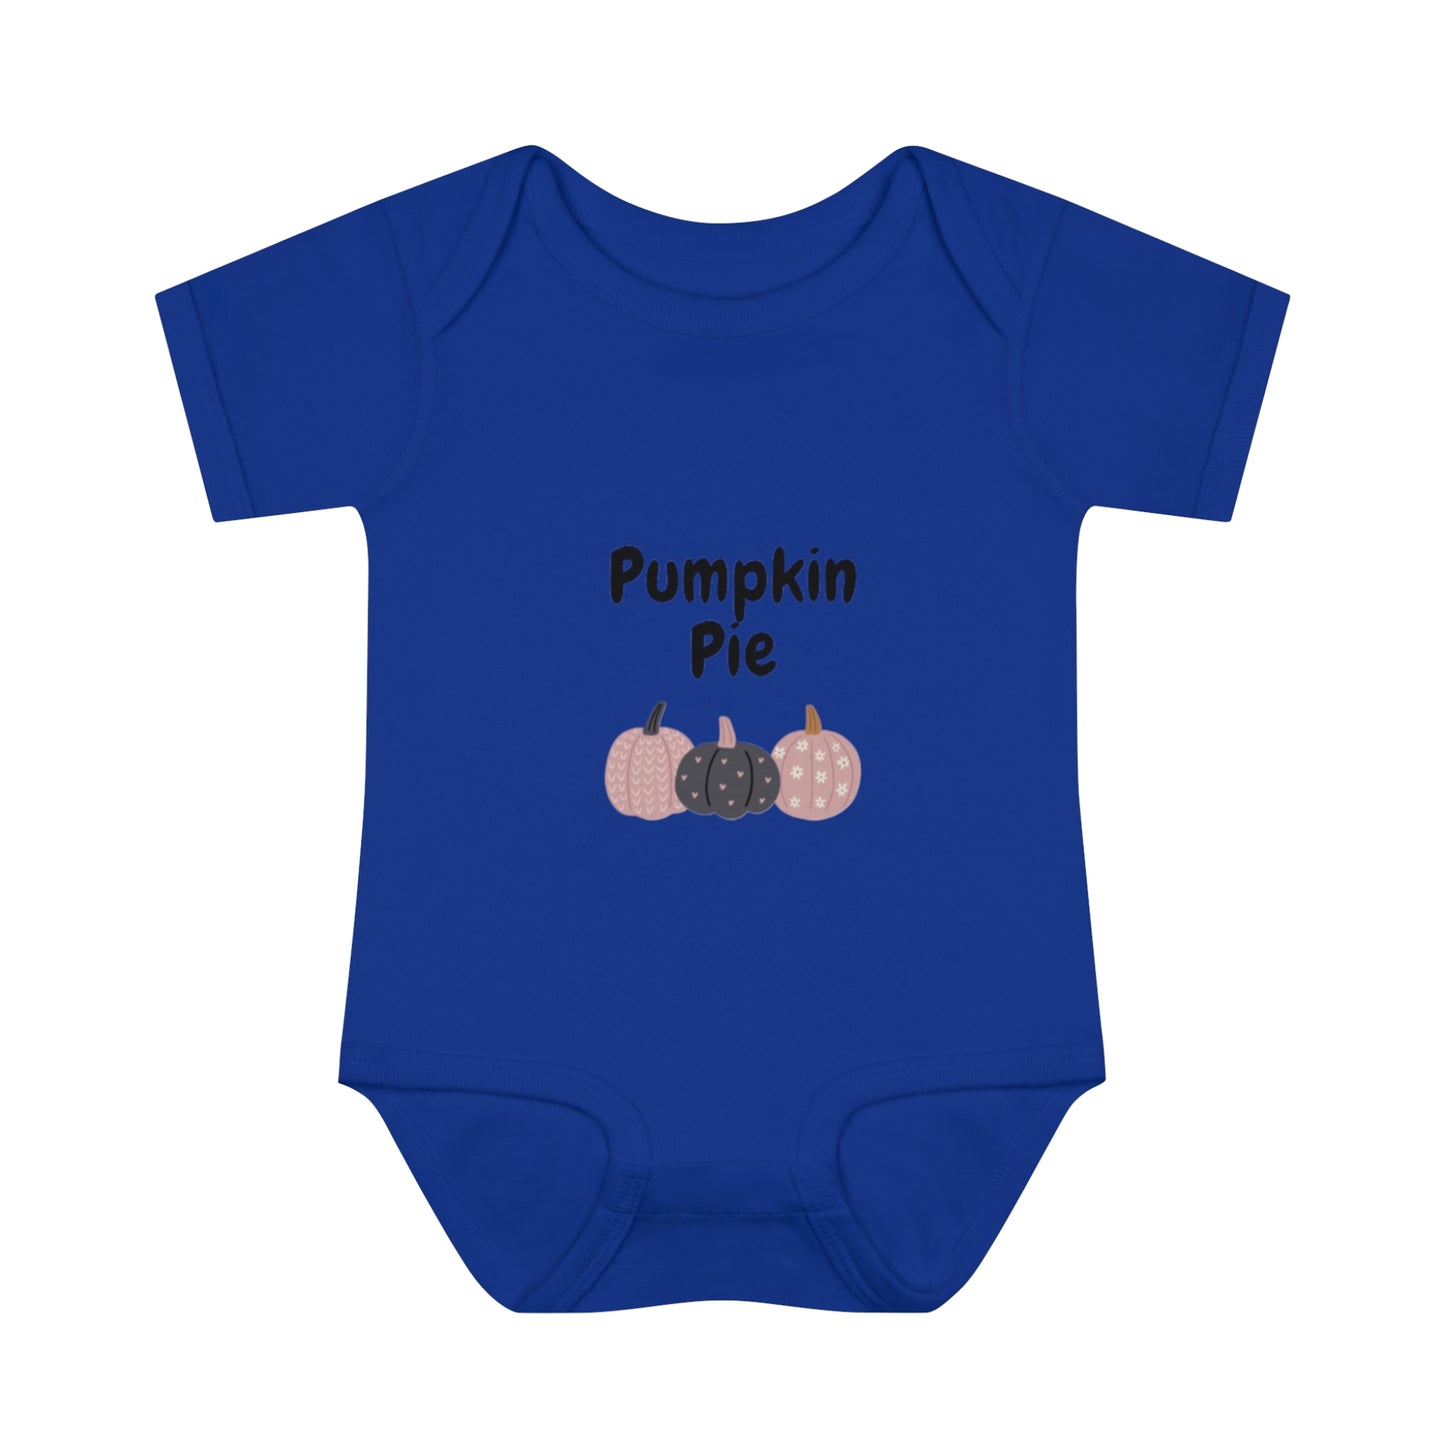 Pumpkin Pie Infant Baby Rib Bodysuit